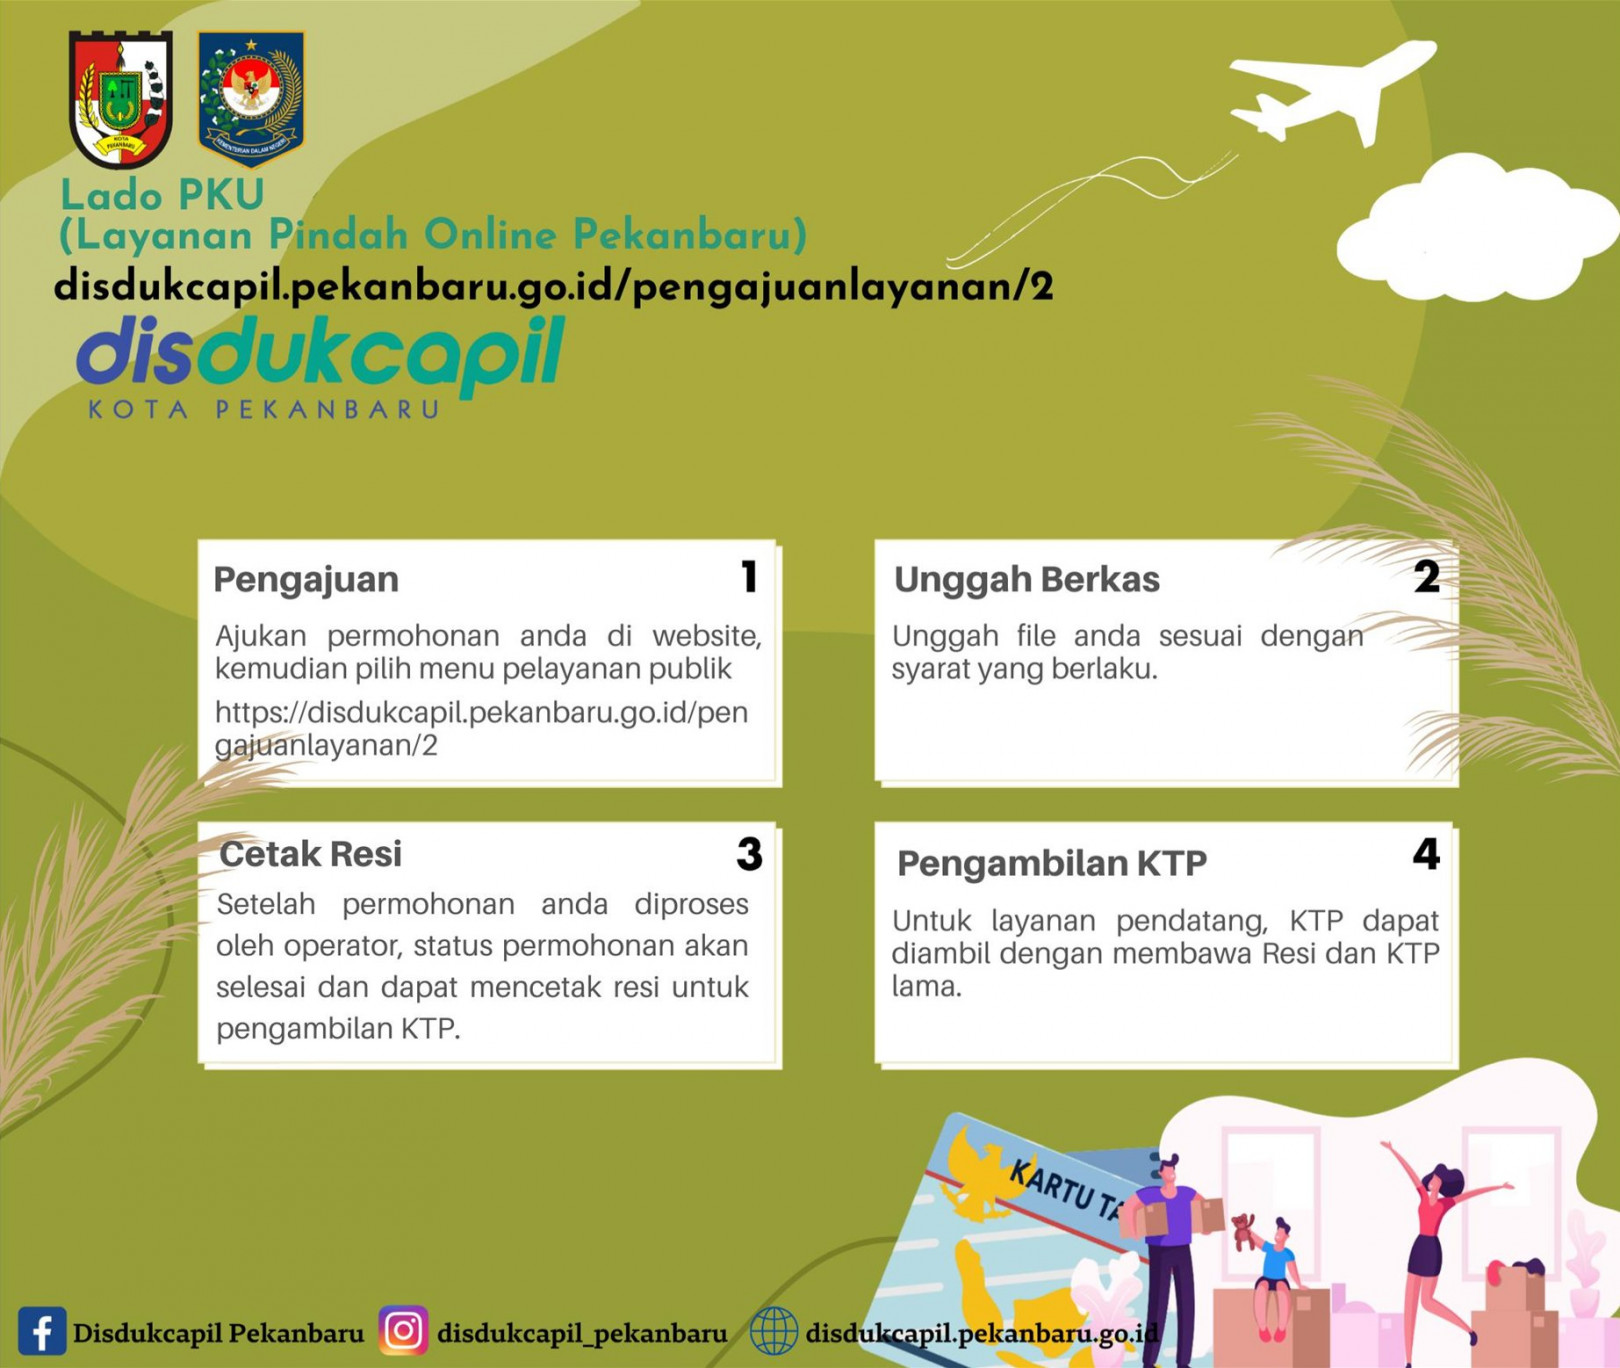 LADO PKU (Layanan Pindah Online Pekanbaru)